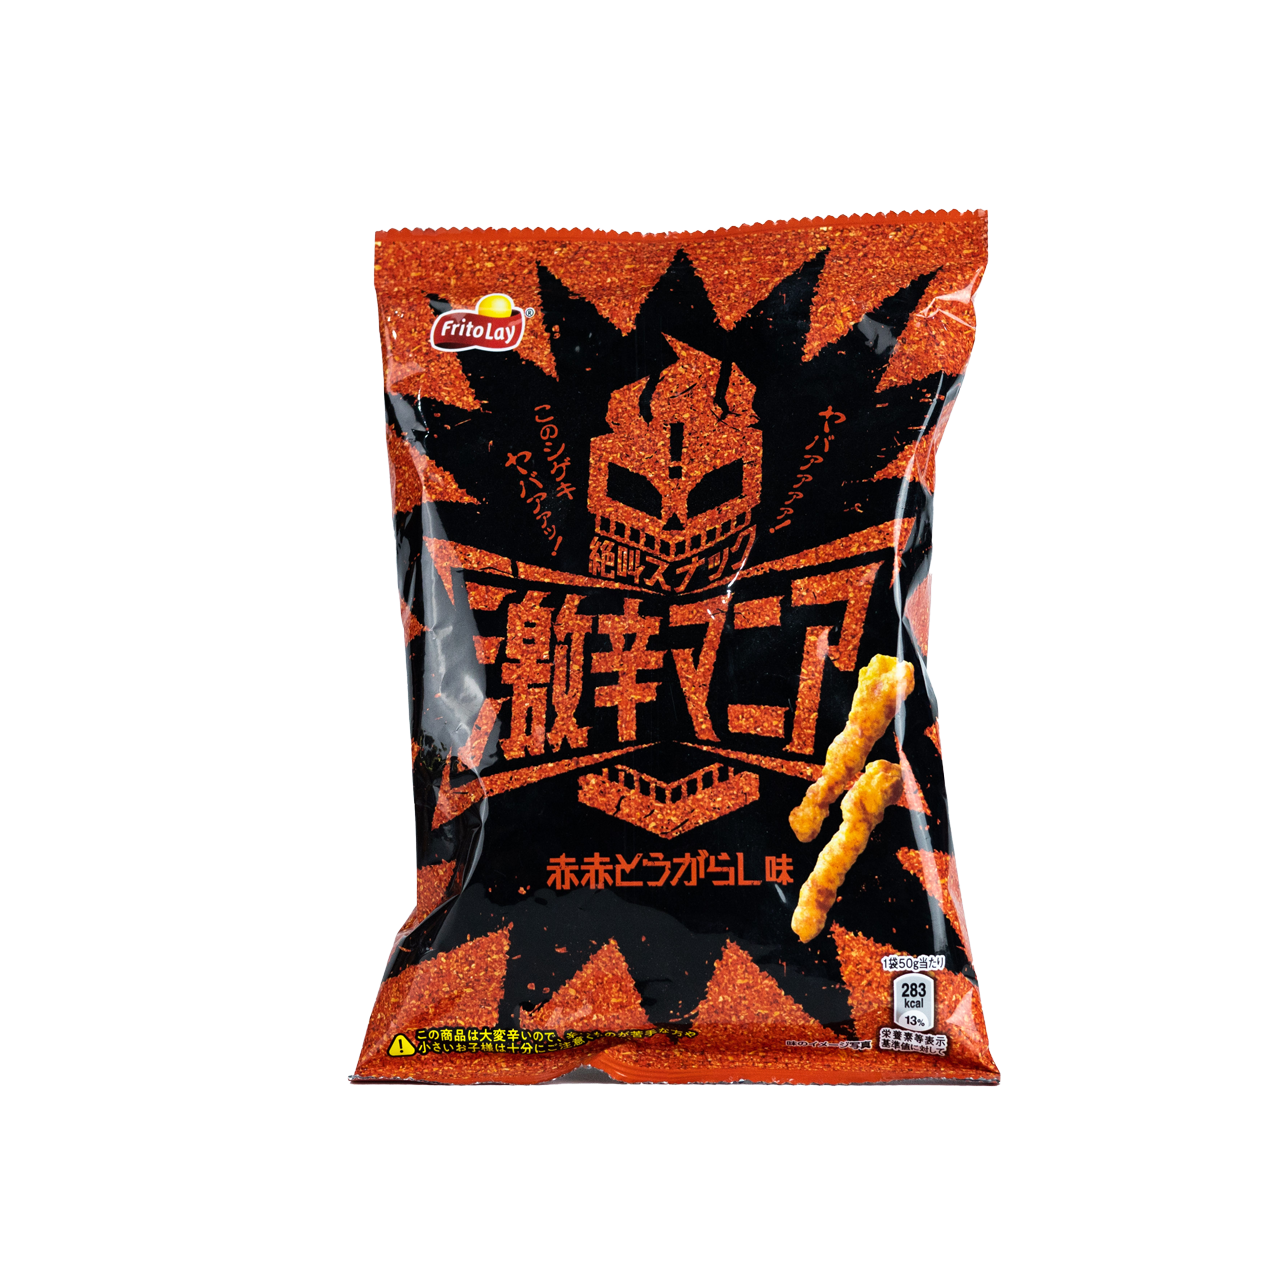 Cheetos Spicy Mania